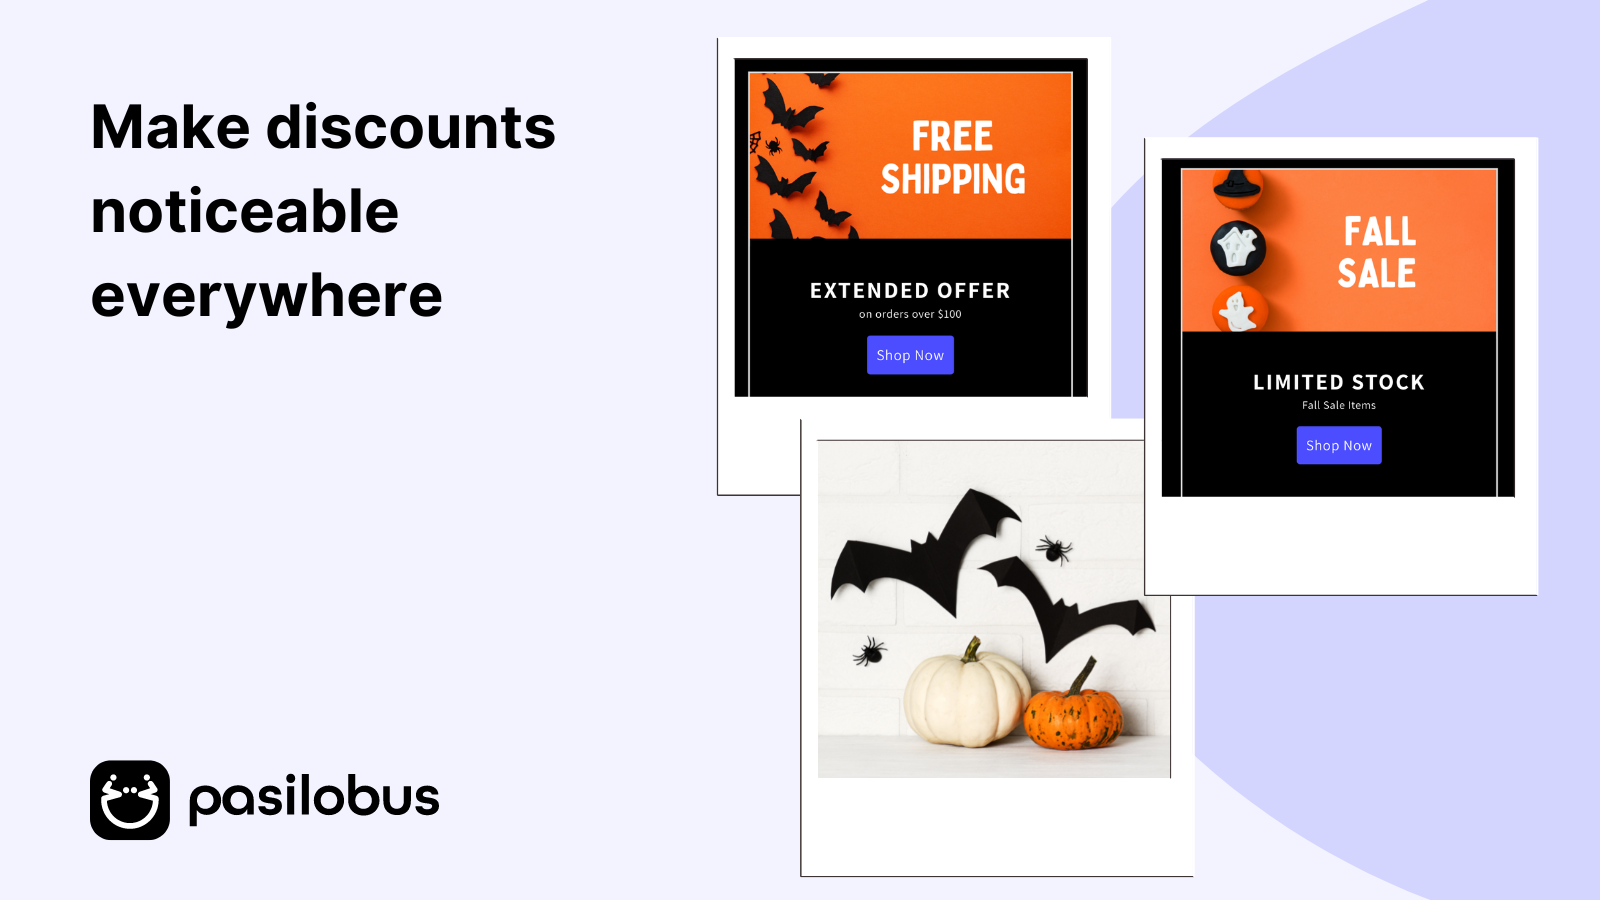 Make discounts noticeable across the entire site - Hotdeals